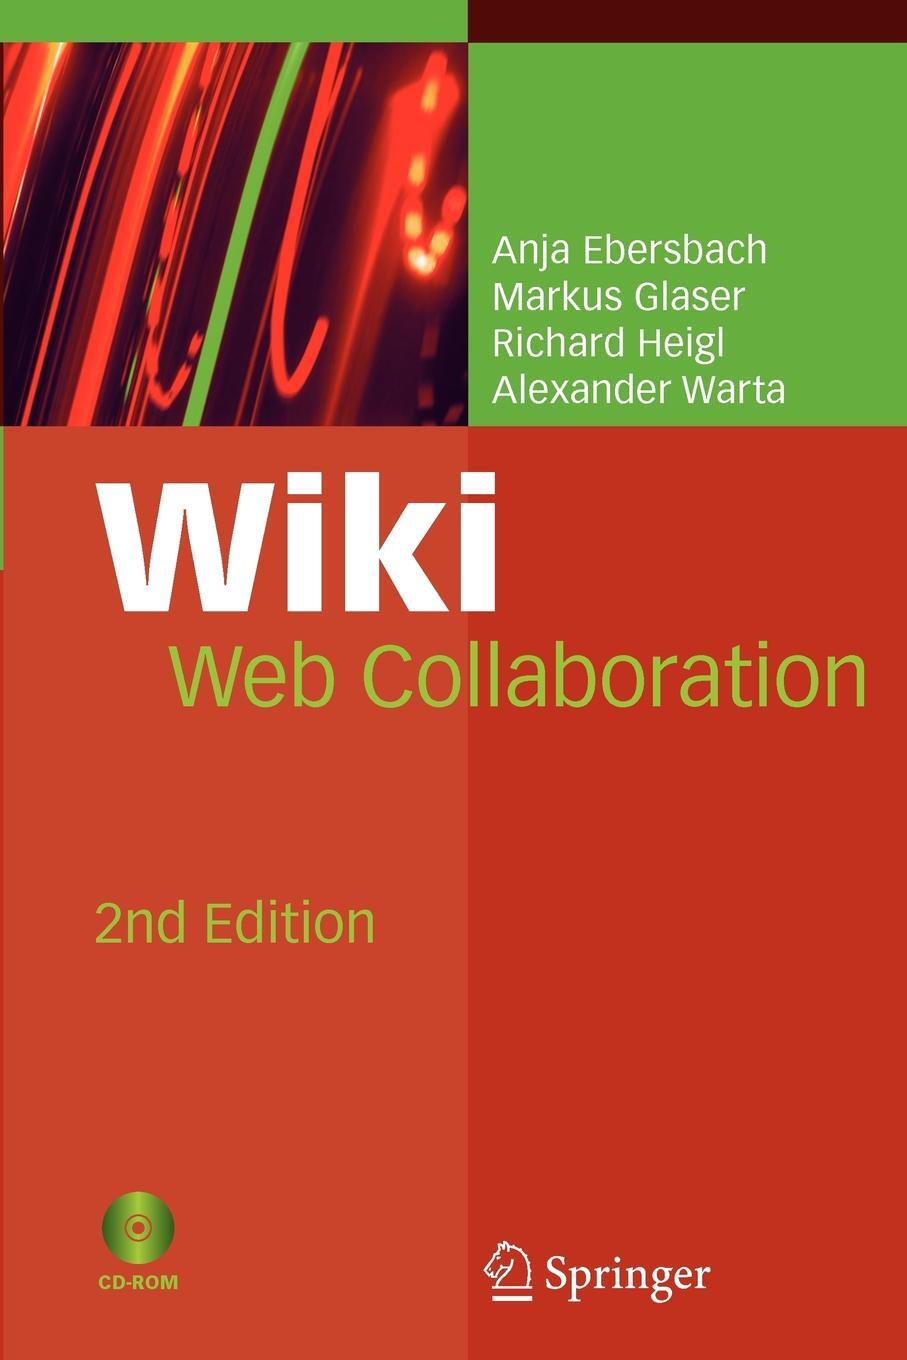 Wiki. Web Collaboration. Second edition by Anja Ebersbach, Markus Glaser Richard Heigl, Alexander Warta